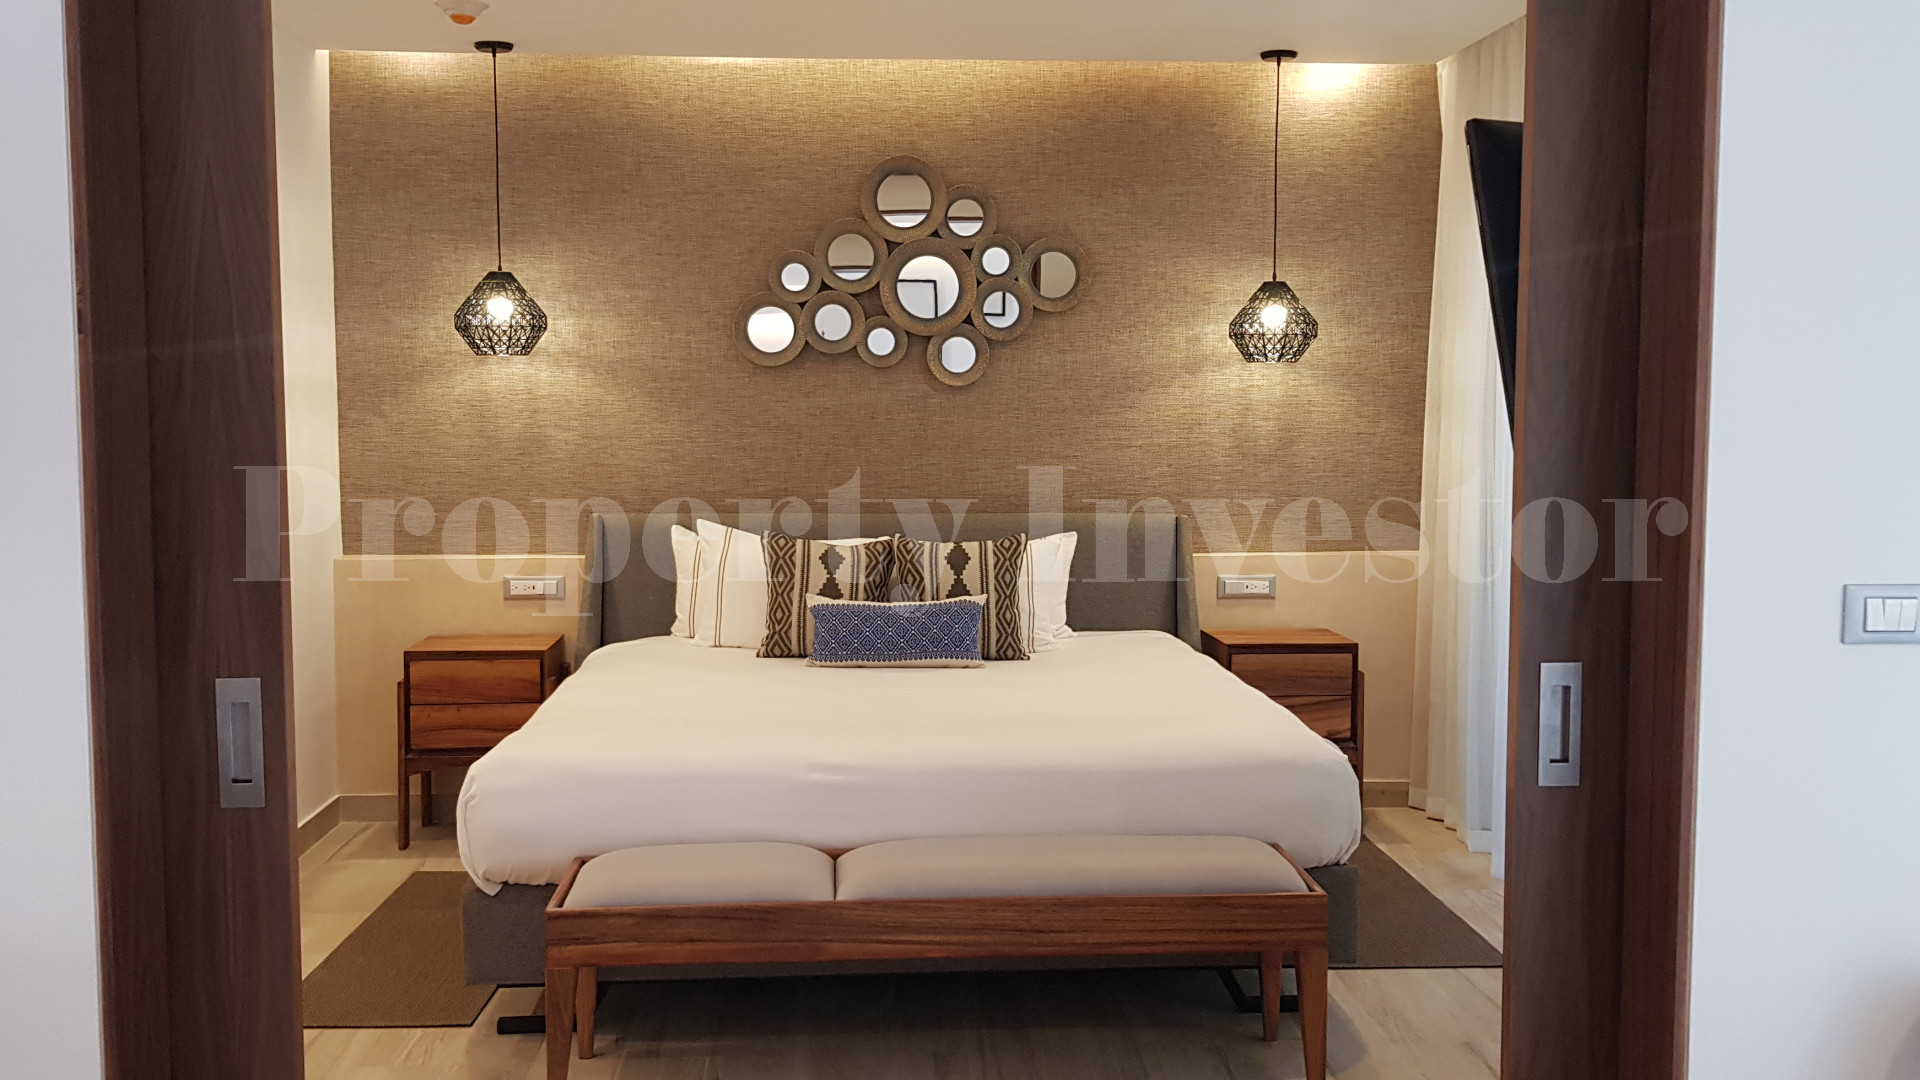 Exclusive 2 Bedroom Boutique Resort Penthouse in Playa del Carmen (Unit 2133)